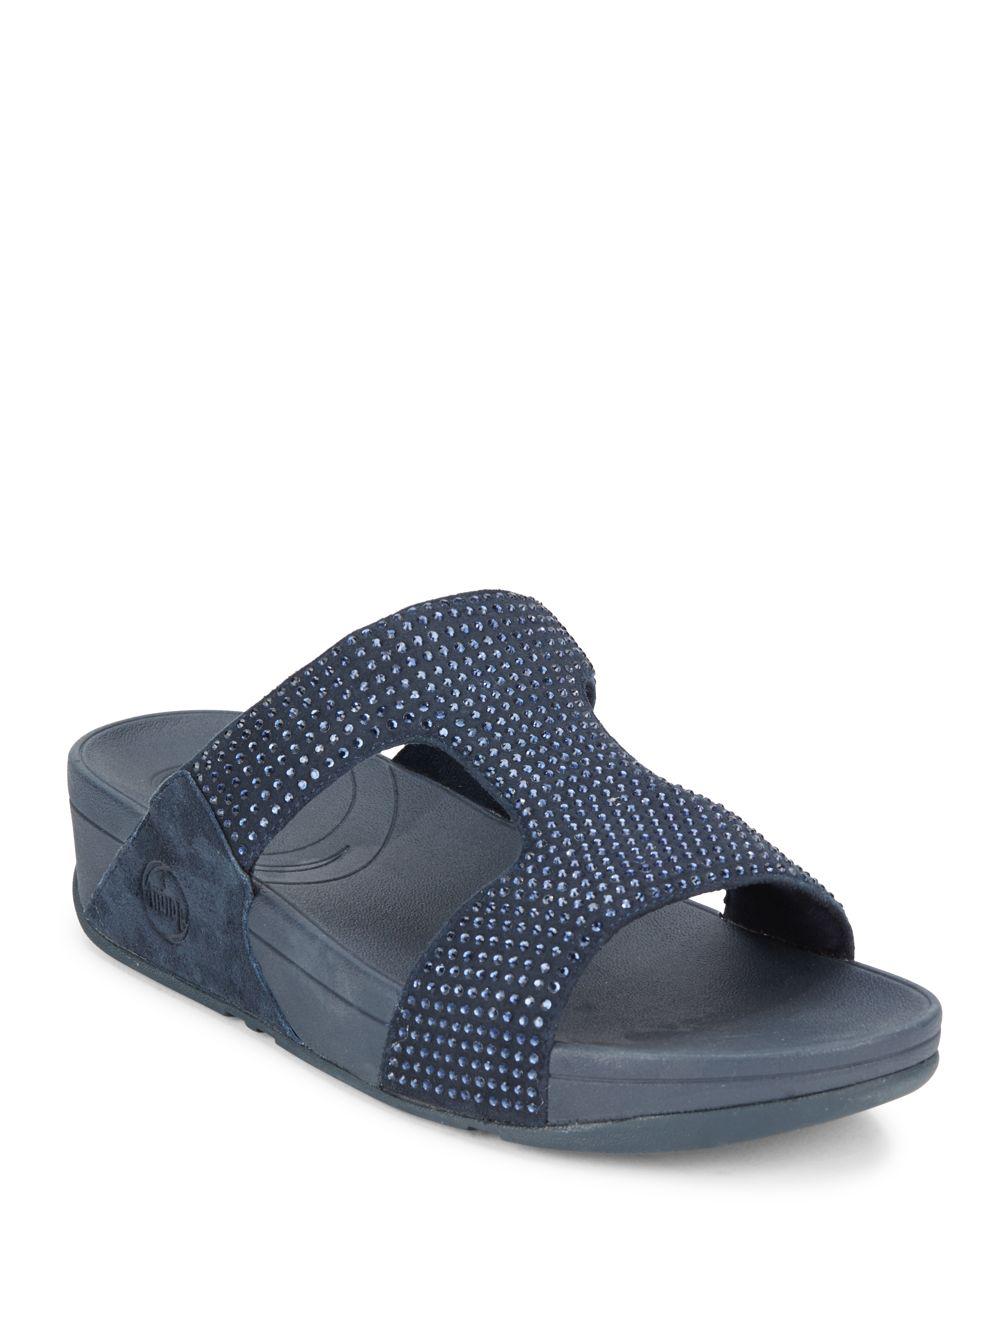 Fitflop Leather Rokkit Slide Sandals in Blue - Lyst